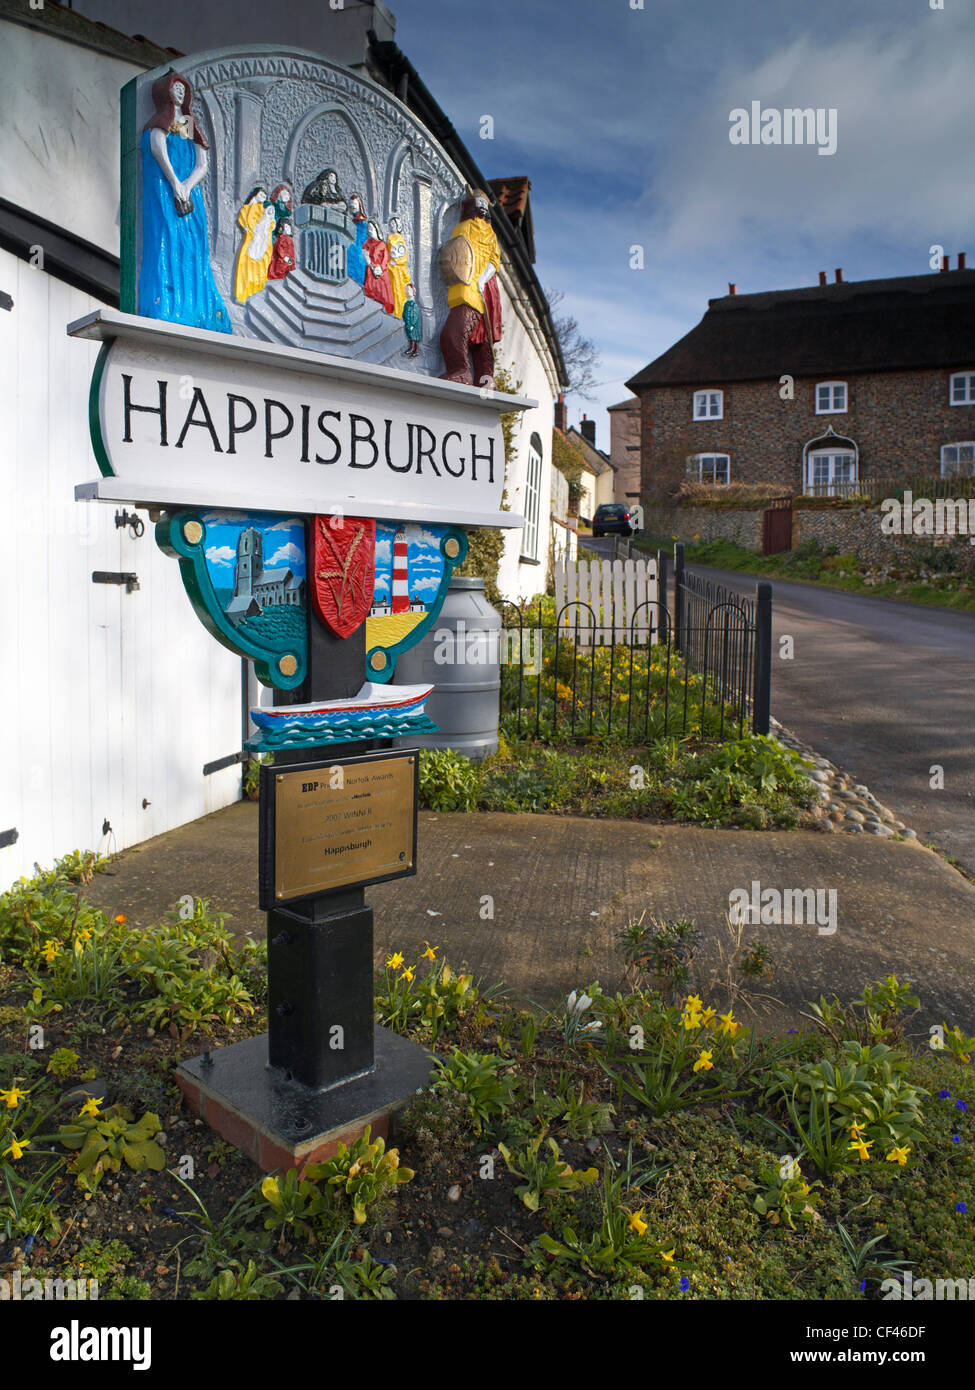 Detalle de Happisburgh signo de aldea. Foto de stock